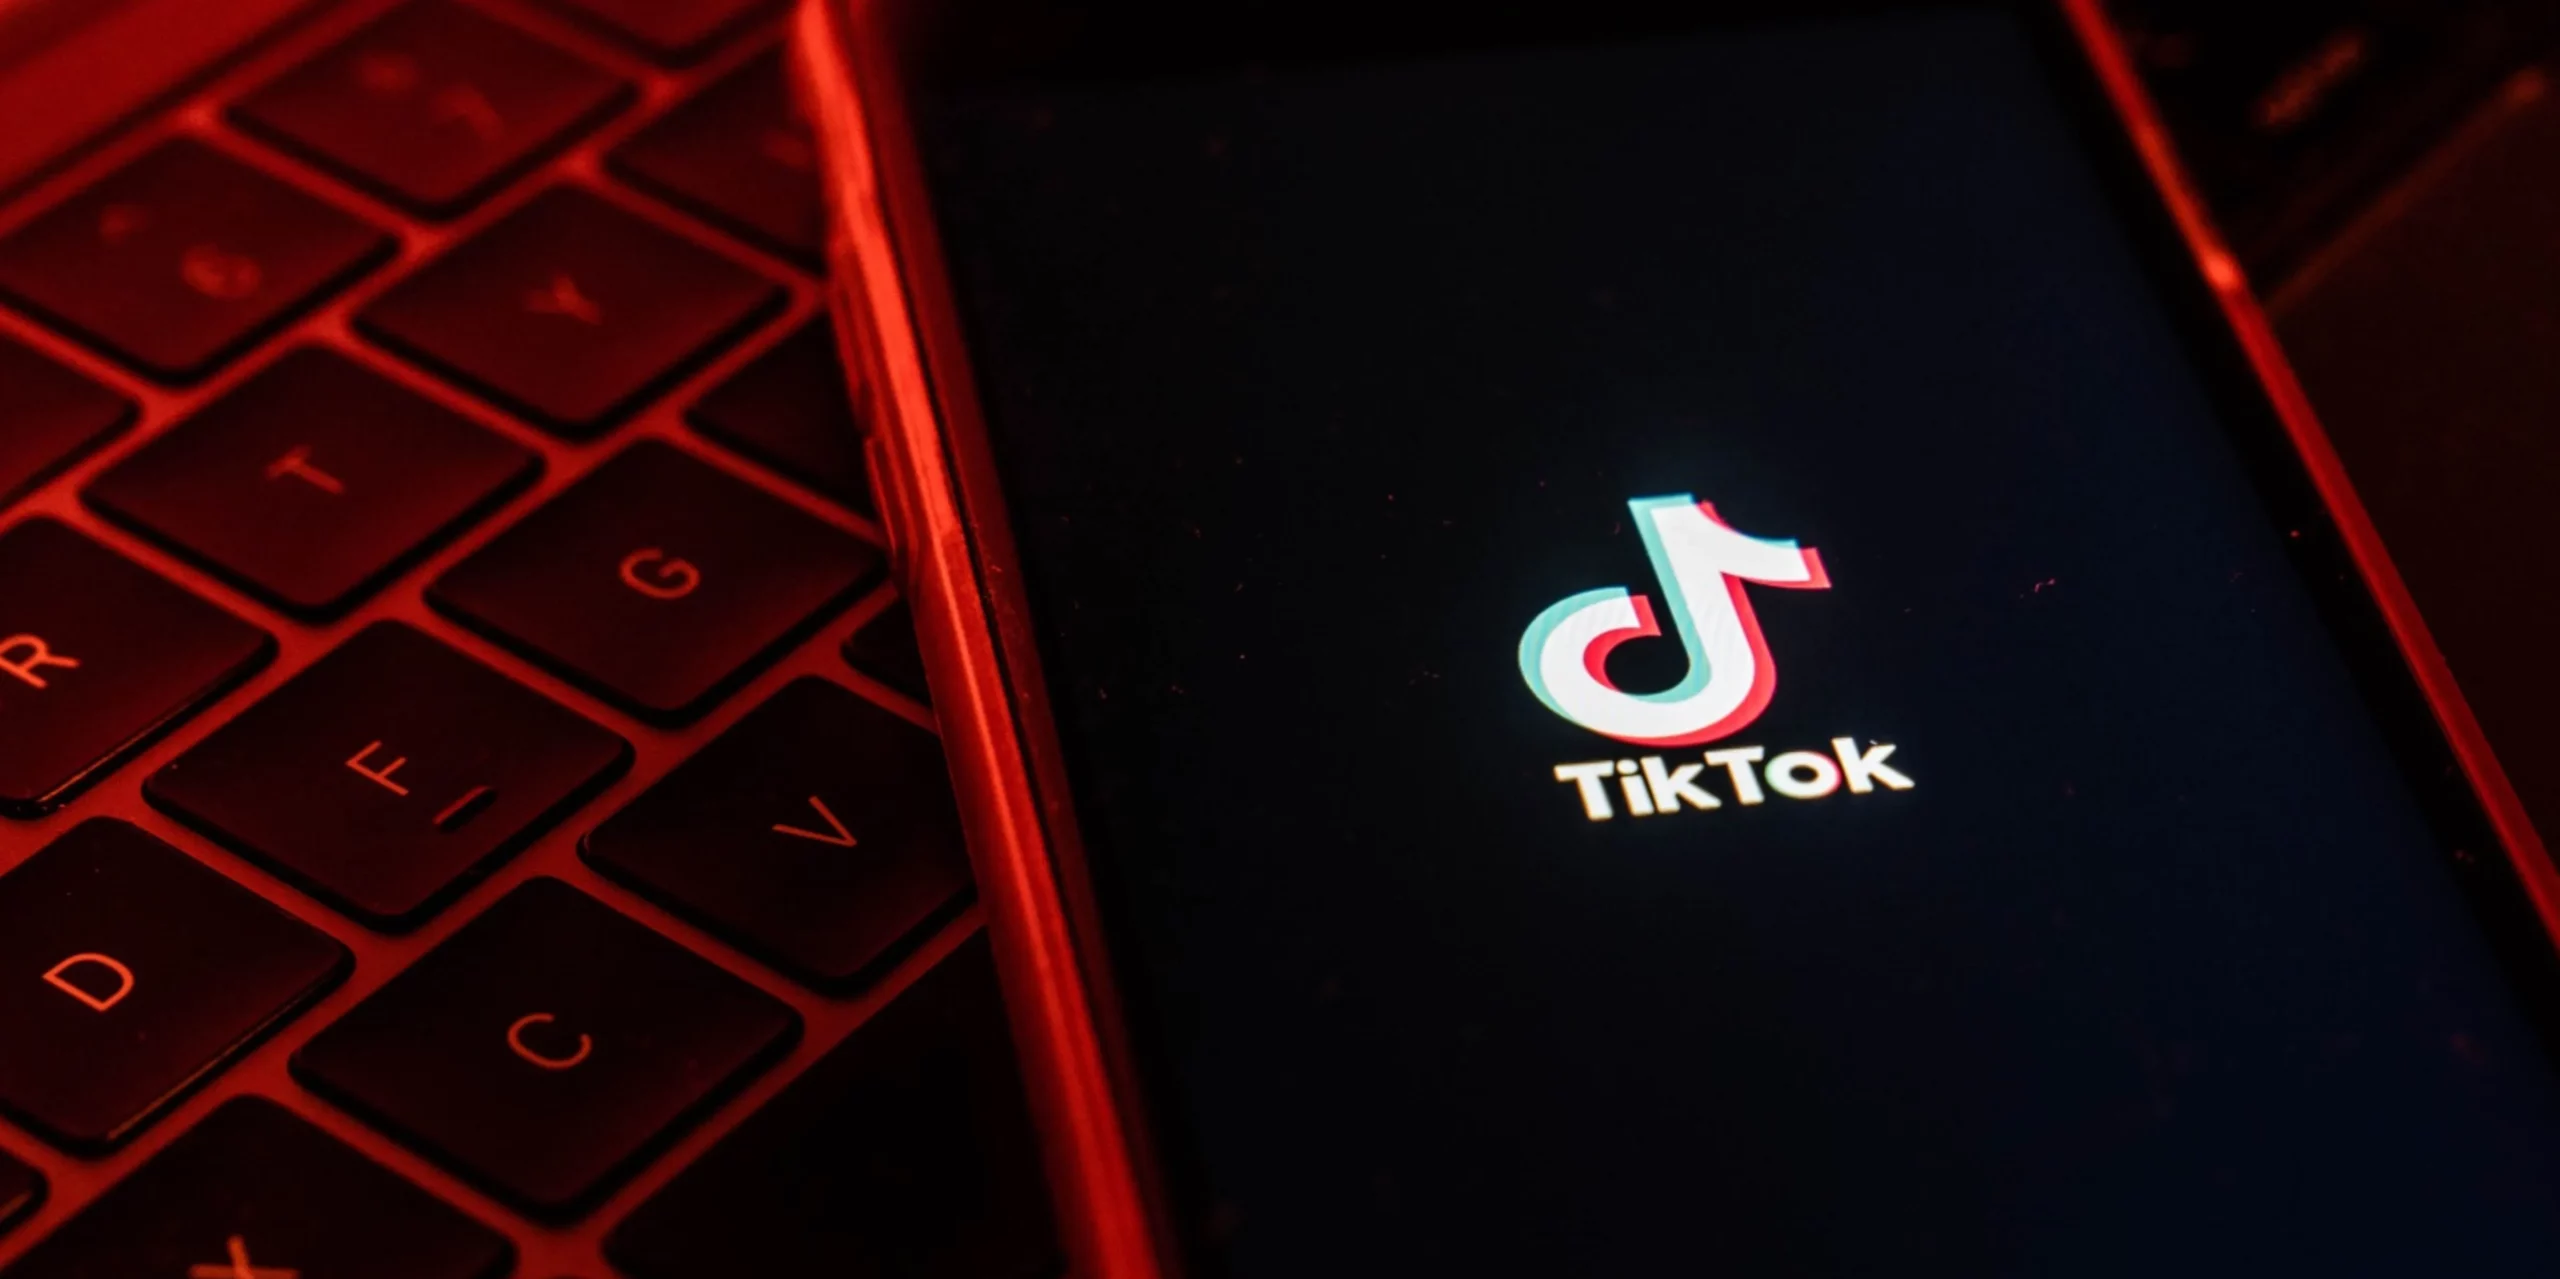 TikTok Hack Targets Paris Hilton, CNN, and Others Through Direct Message